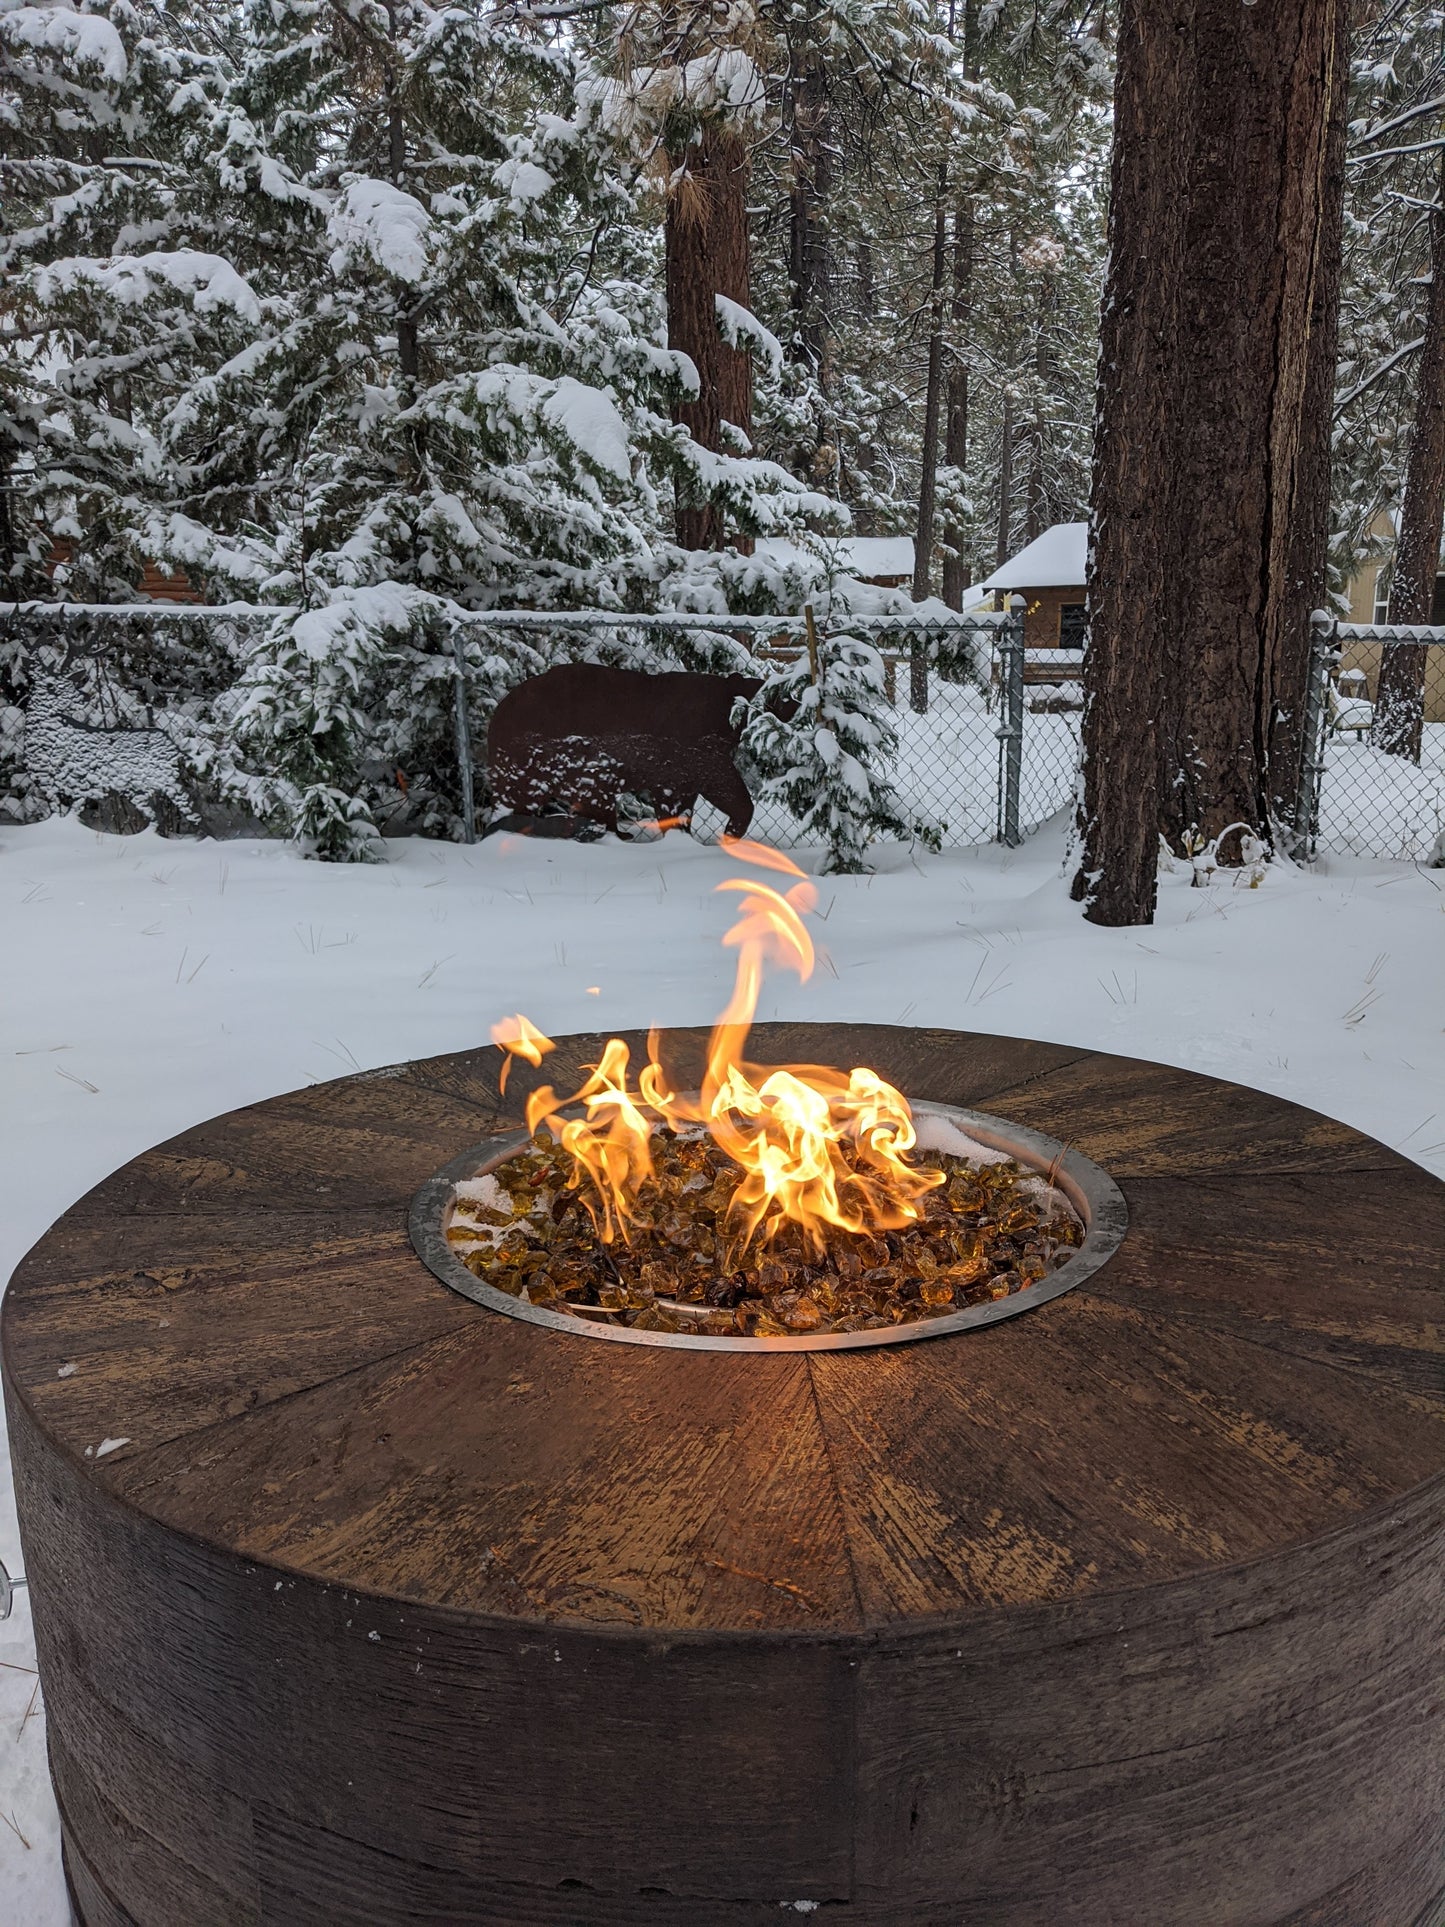 The Outdoor Plus Sequoia Wood Grain Concrete Fire Pit + Free Cover